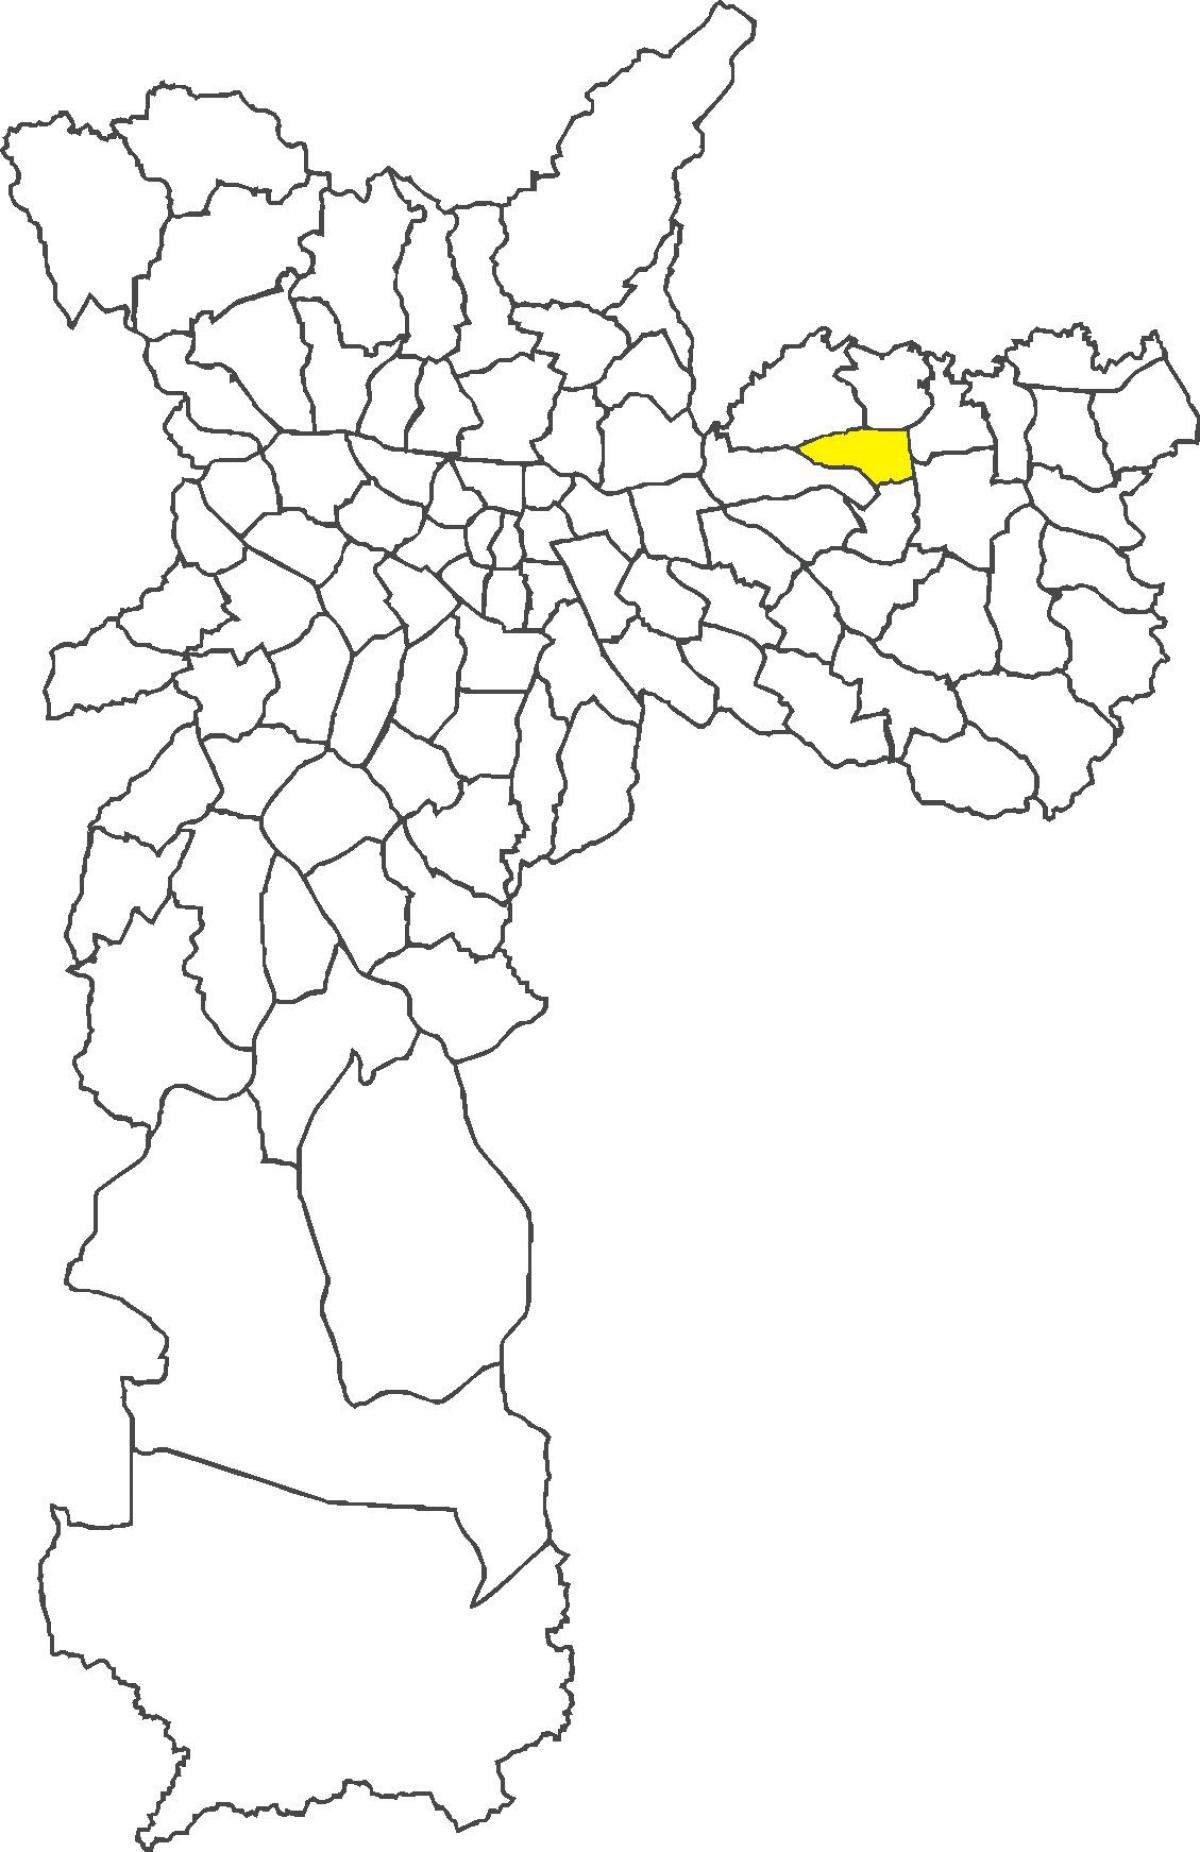 Kart over Ponte Rasa-distriktet